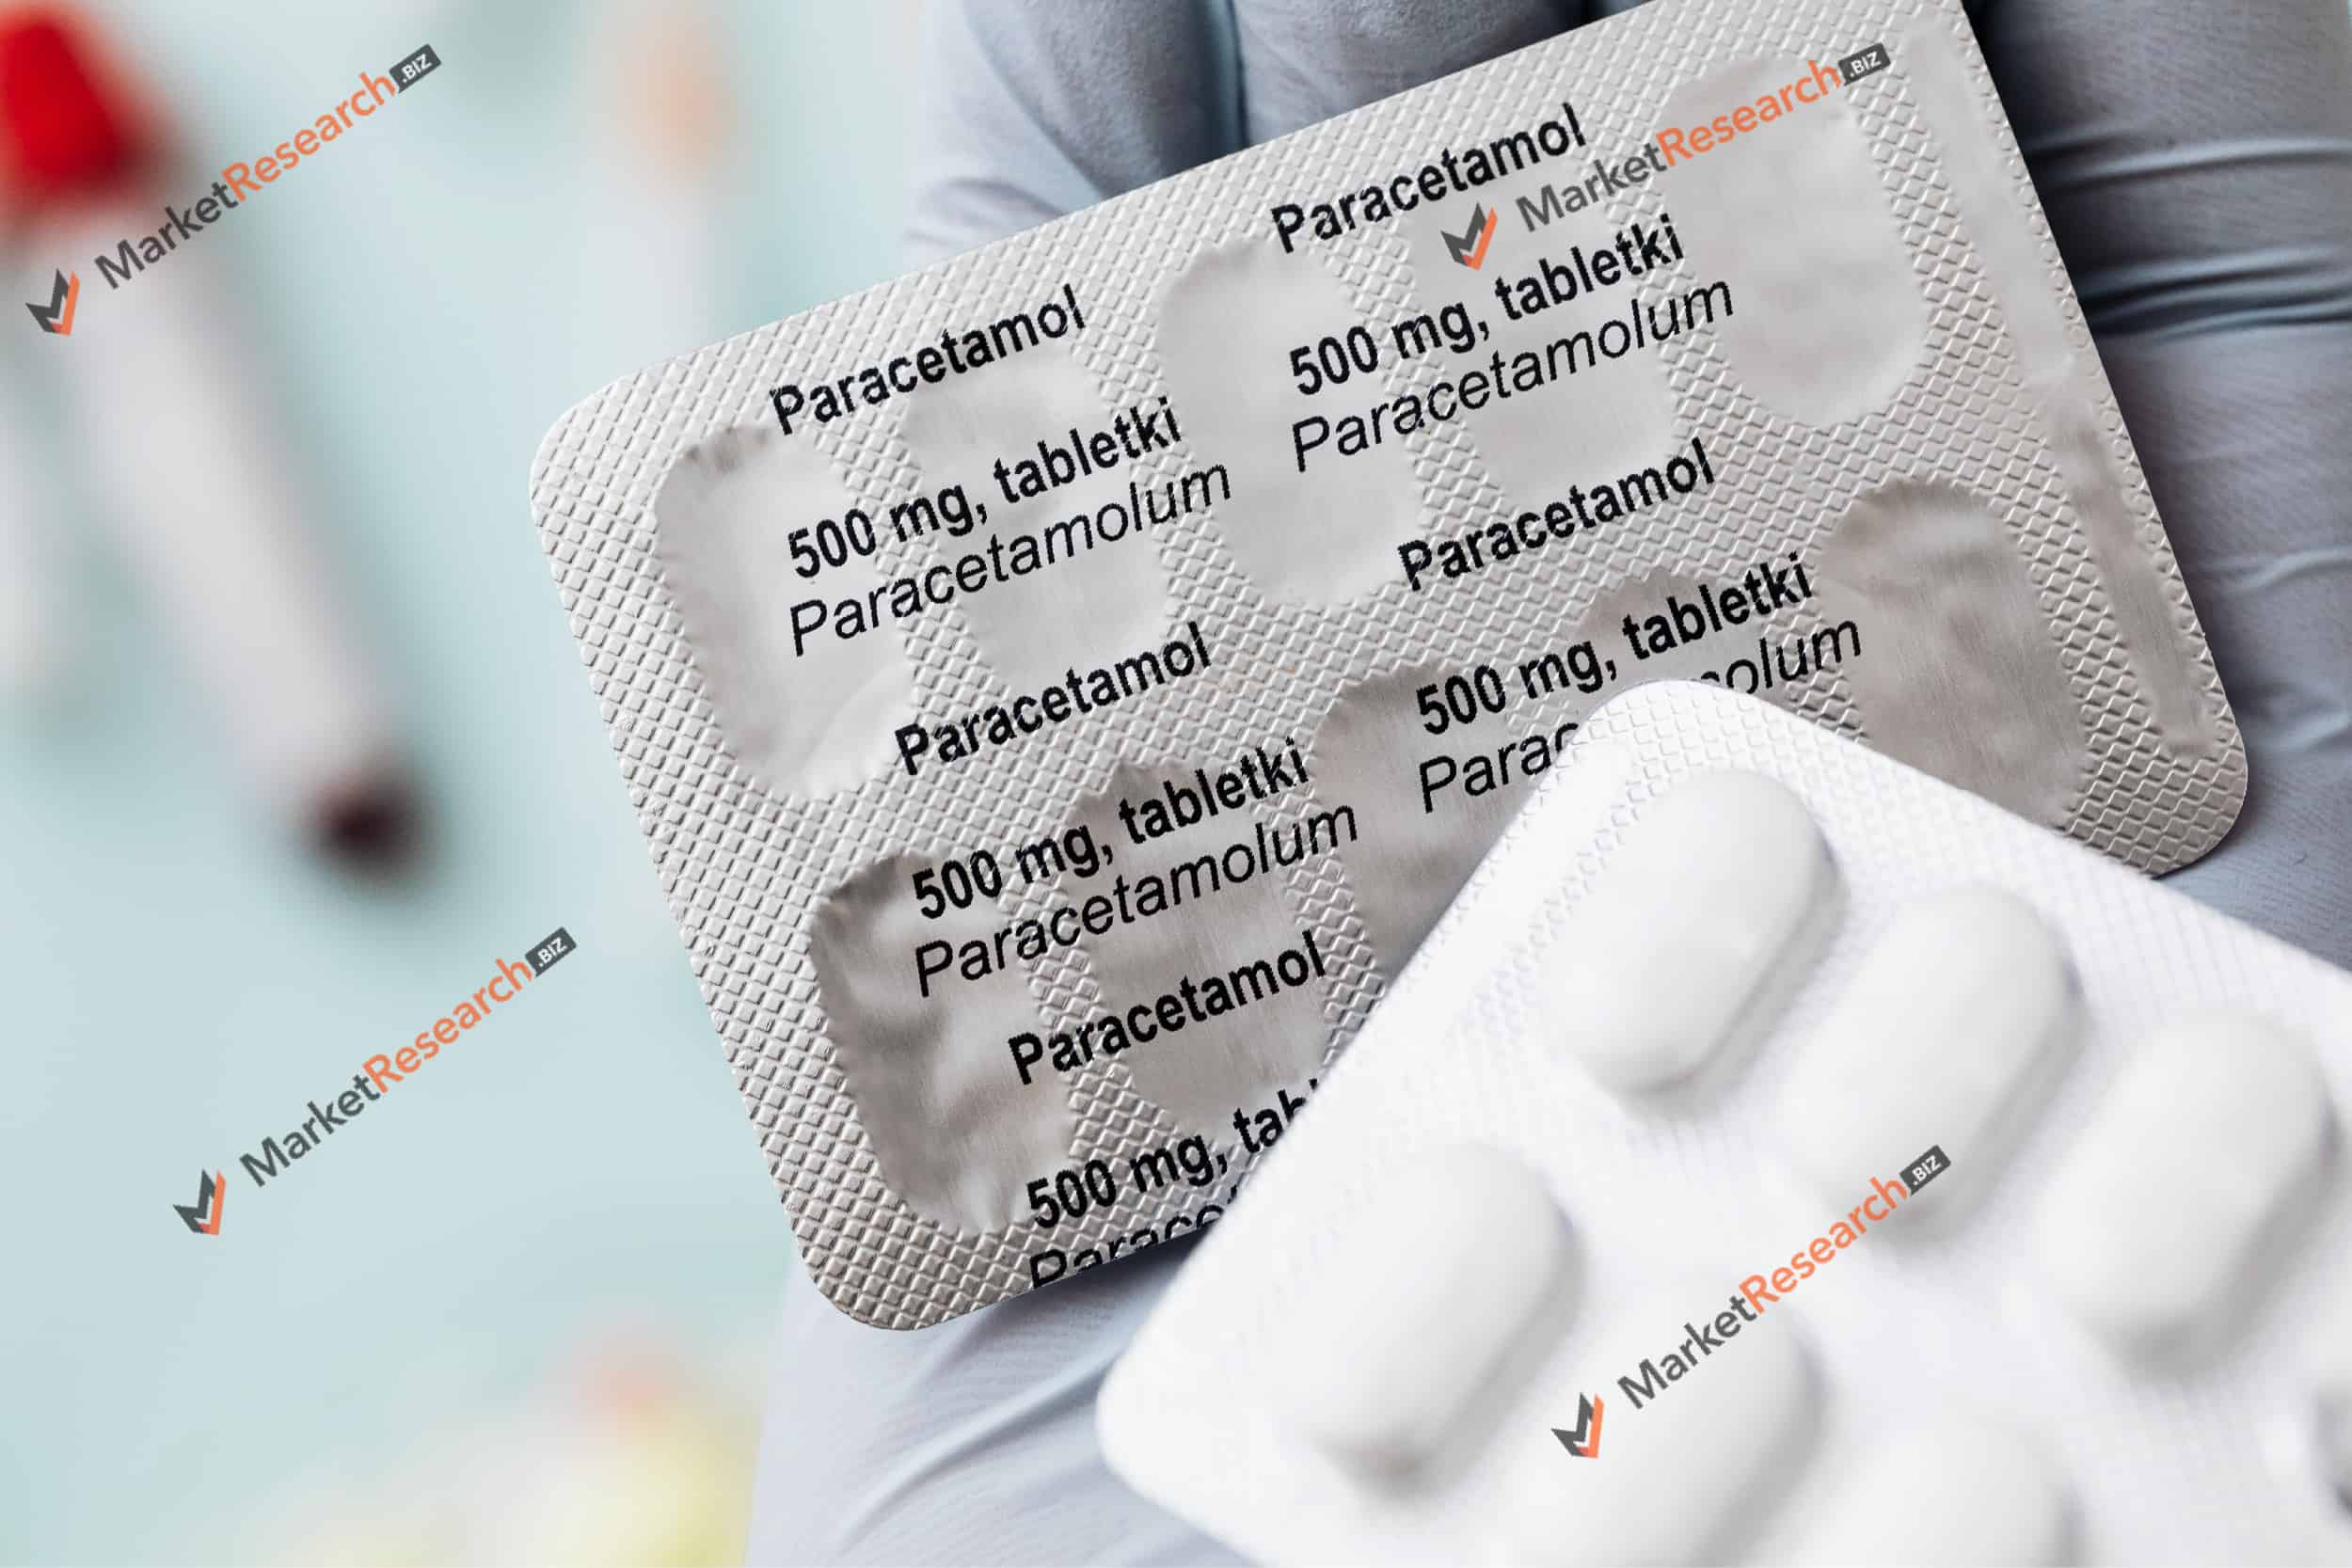 PAP and Paracetamol Market